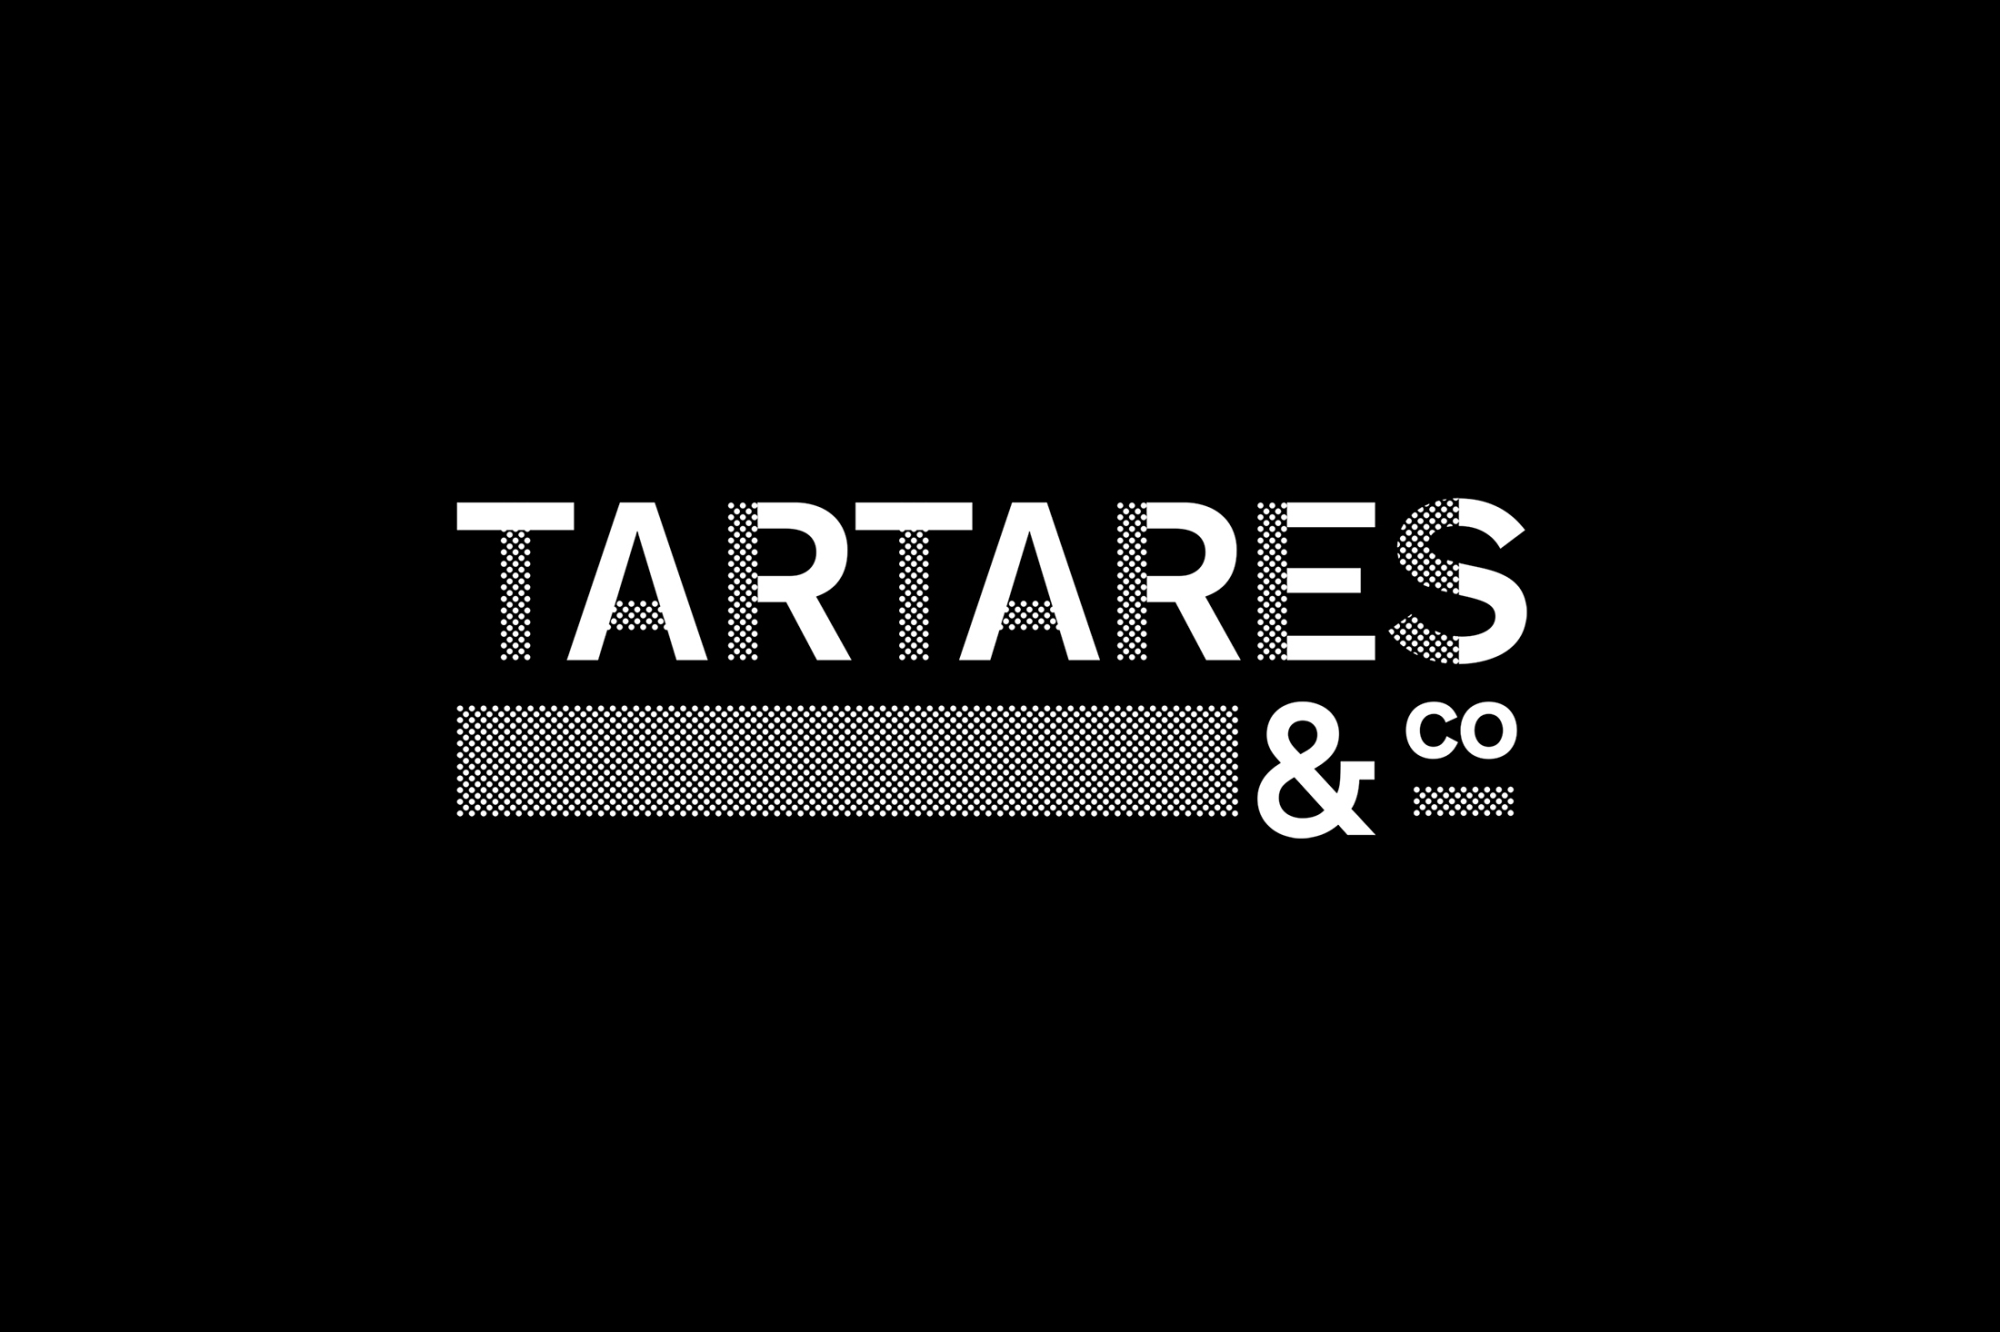 Graphisme Geneve graphic design graphique direction artistique logo identité visuelle identity branding brand  tartares & co bar restaurant grand prix 2015 